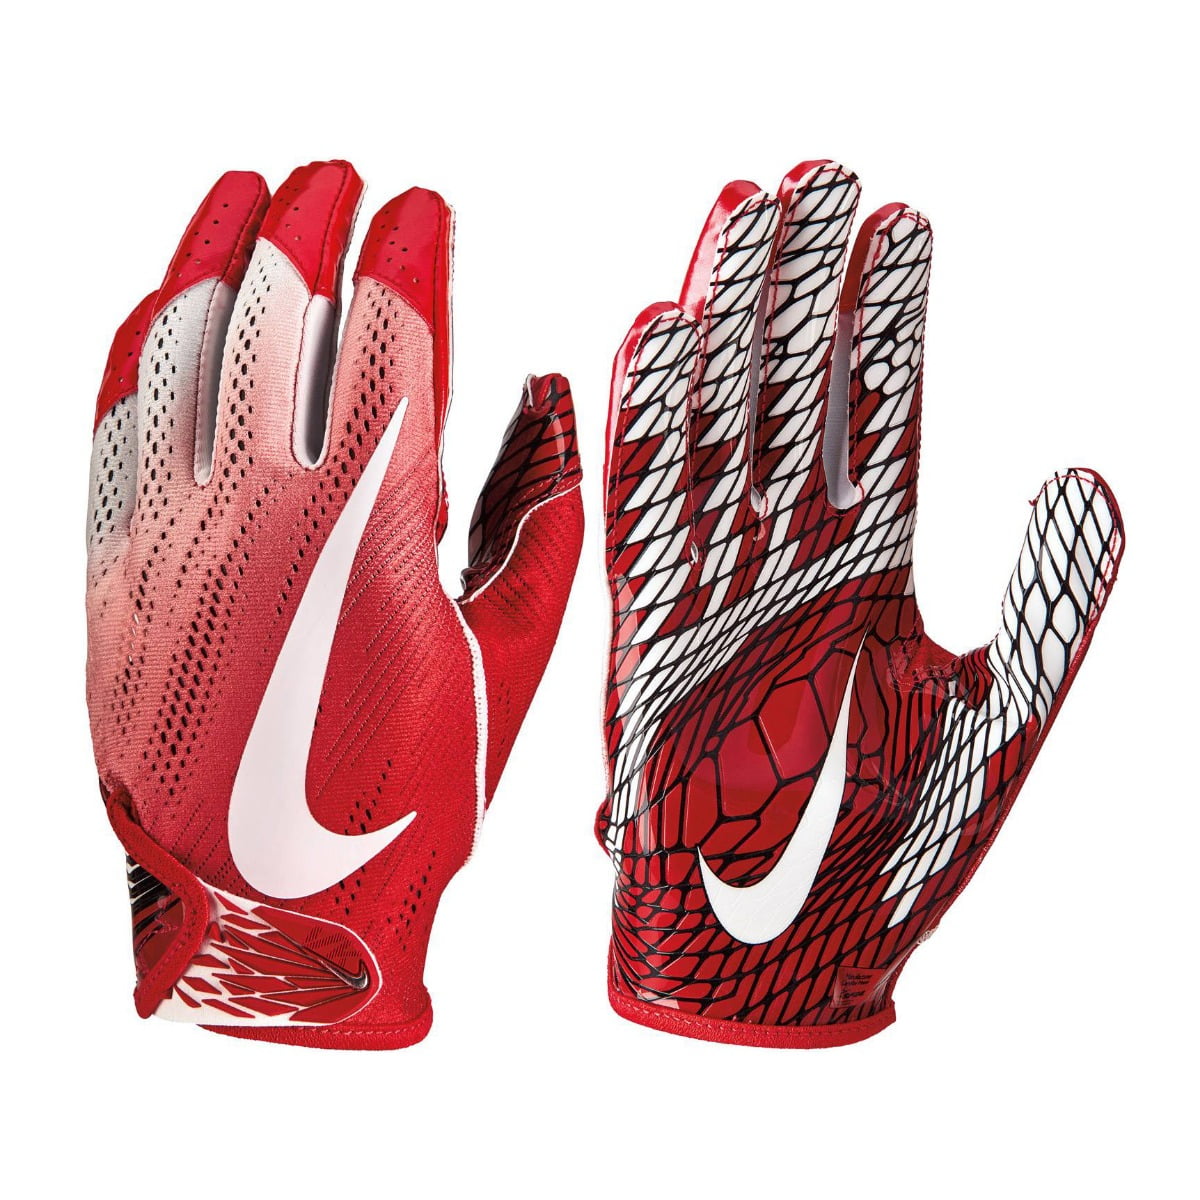 Nike Vapor Knit Elite Magnagrip Football Receiver Gloves Red Size XXL